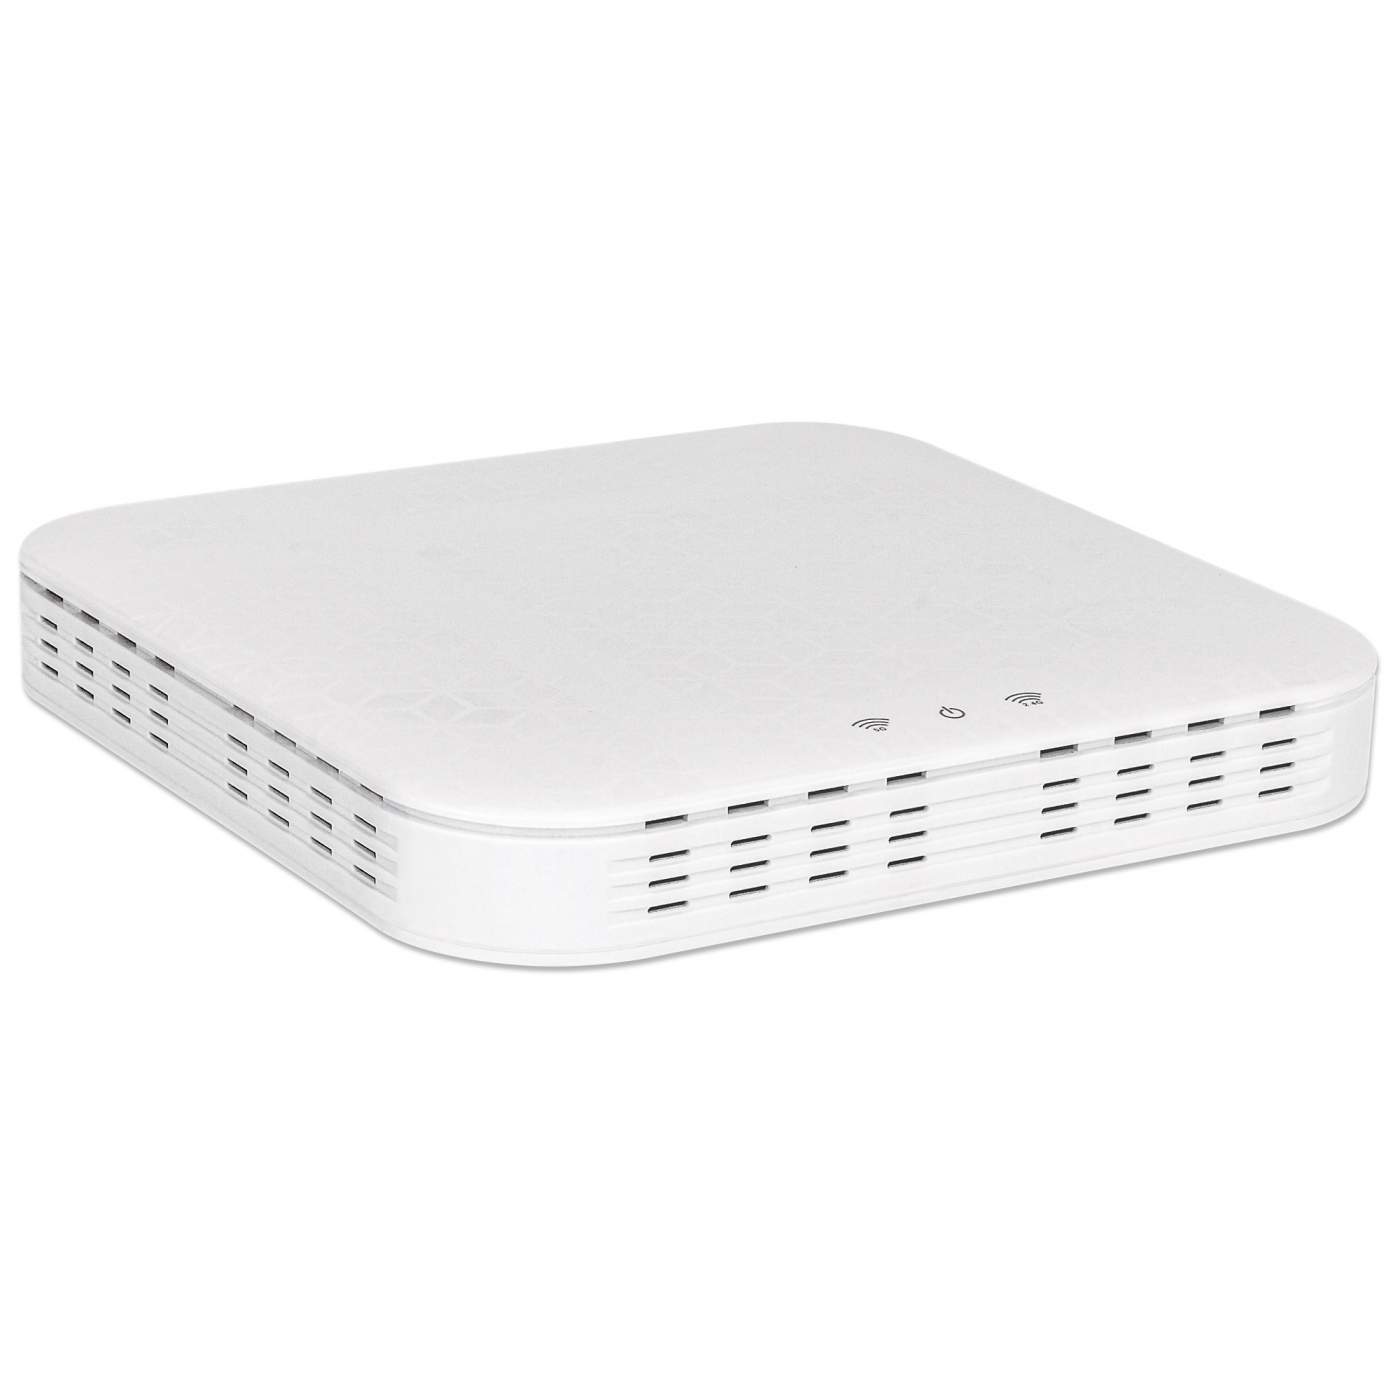 Managebarer Wireless AC1300 Dual-Band Gigabit PoE Indoor Access Point und Router Image 2